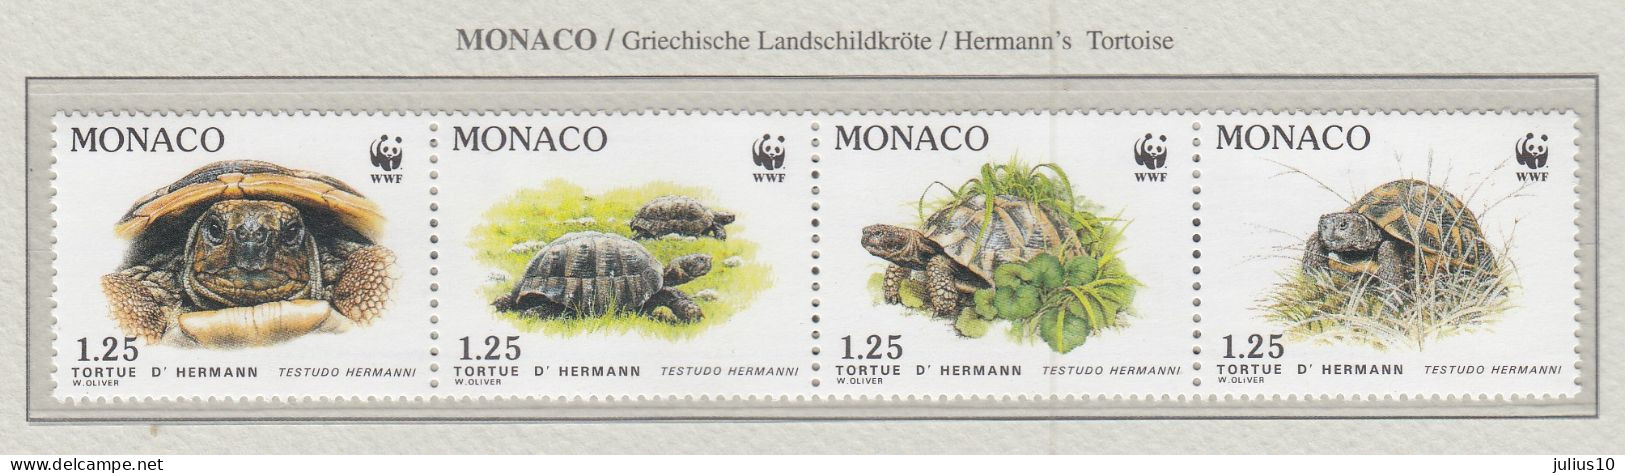 MONACO 1991 WWF Turtles Mi 2046-2049 MNH(**) Fauna 802 - Schildkröten